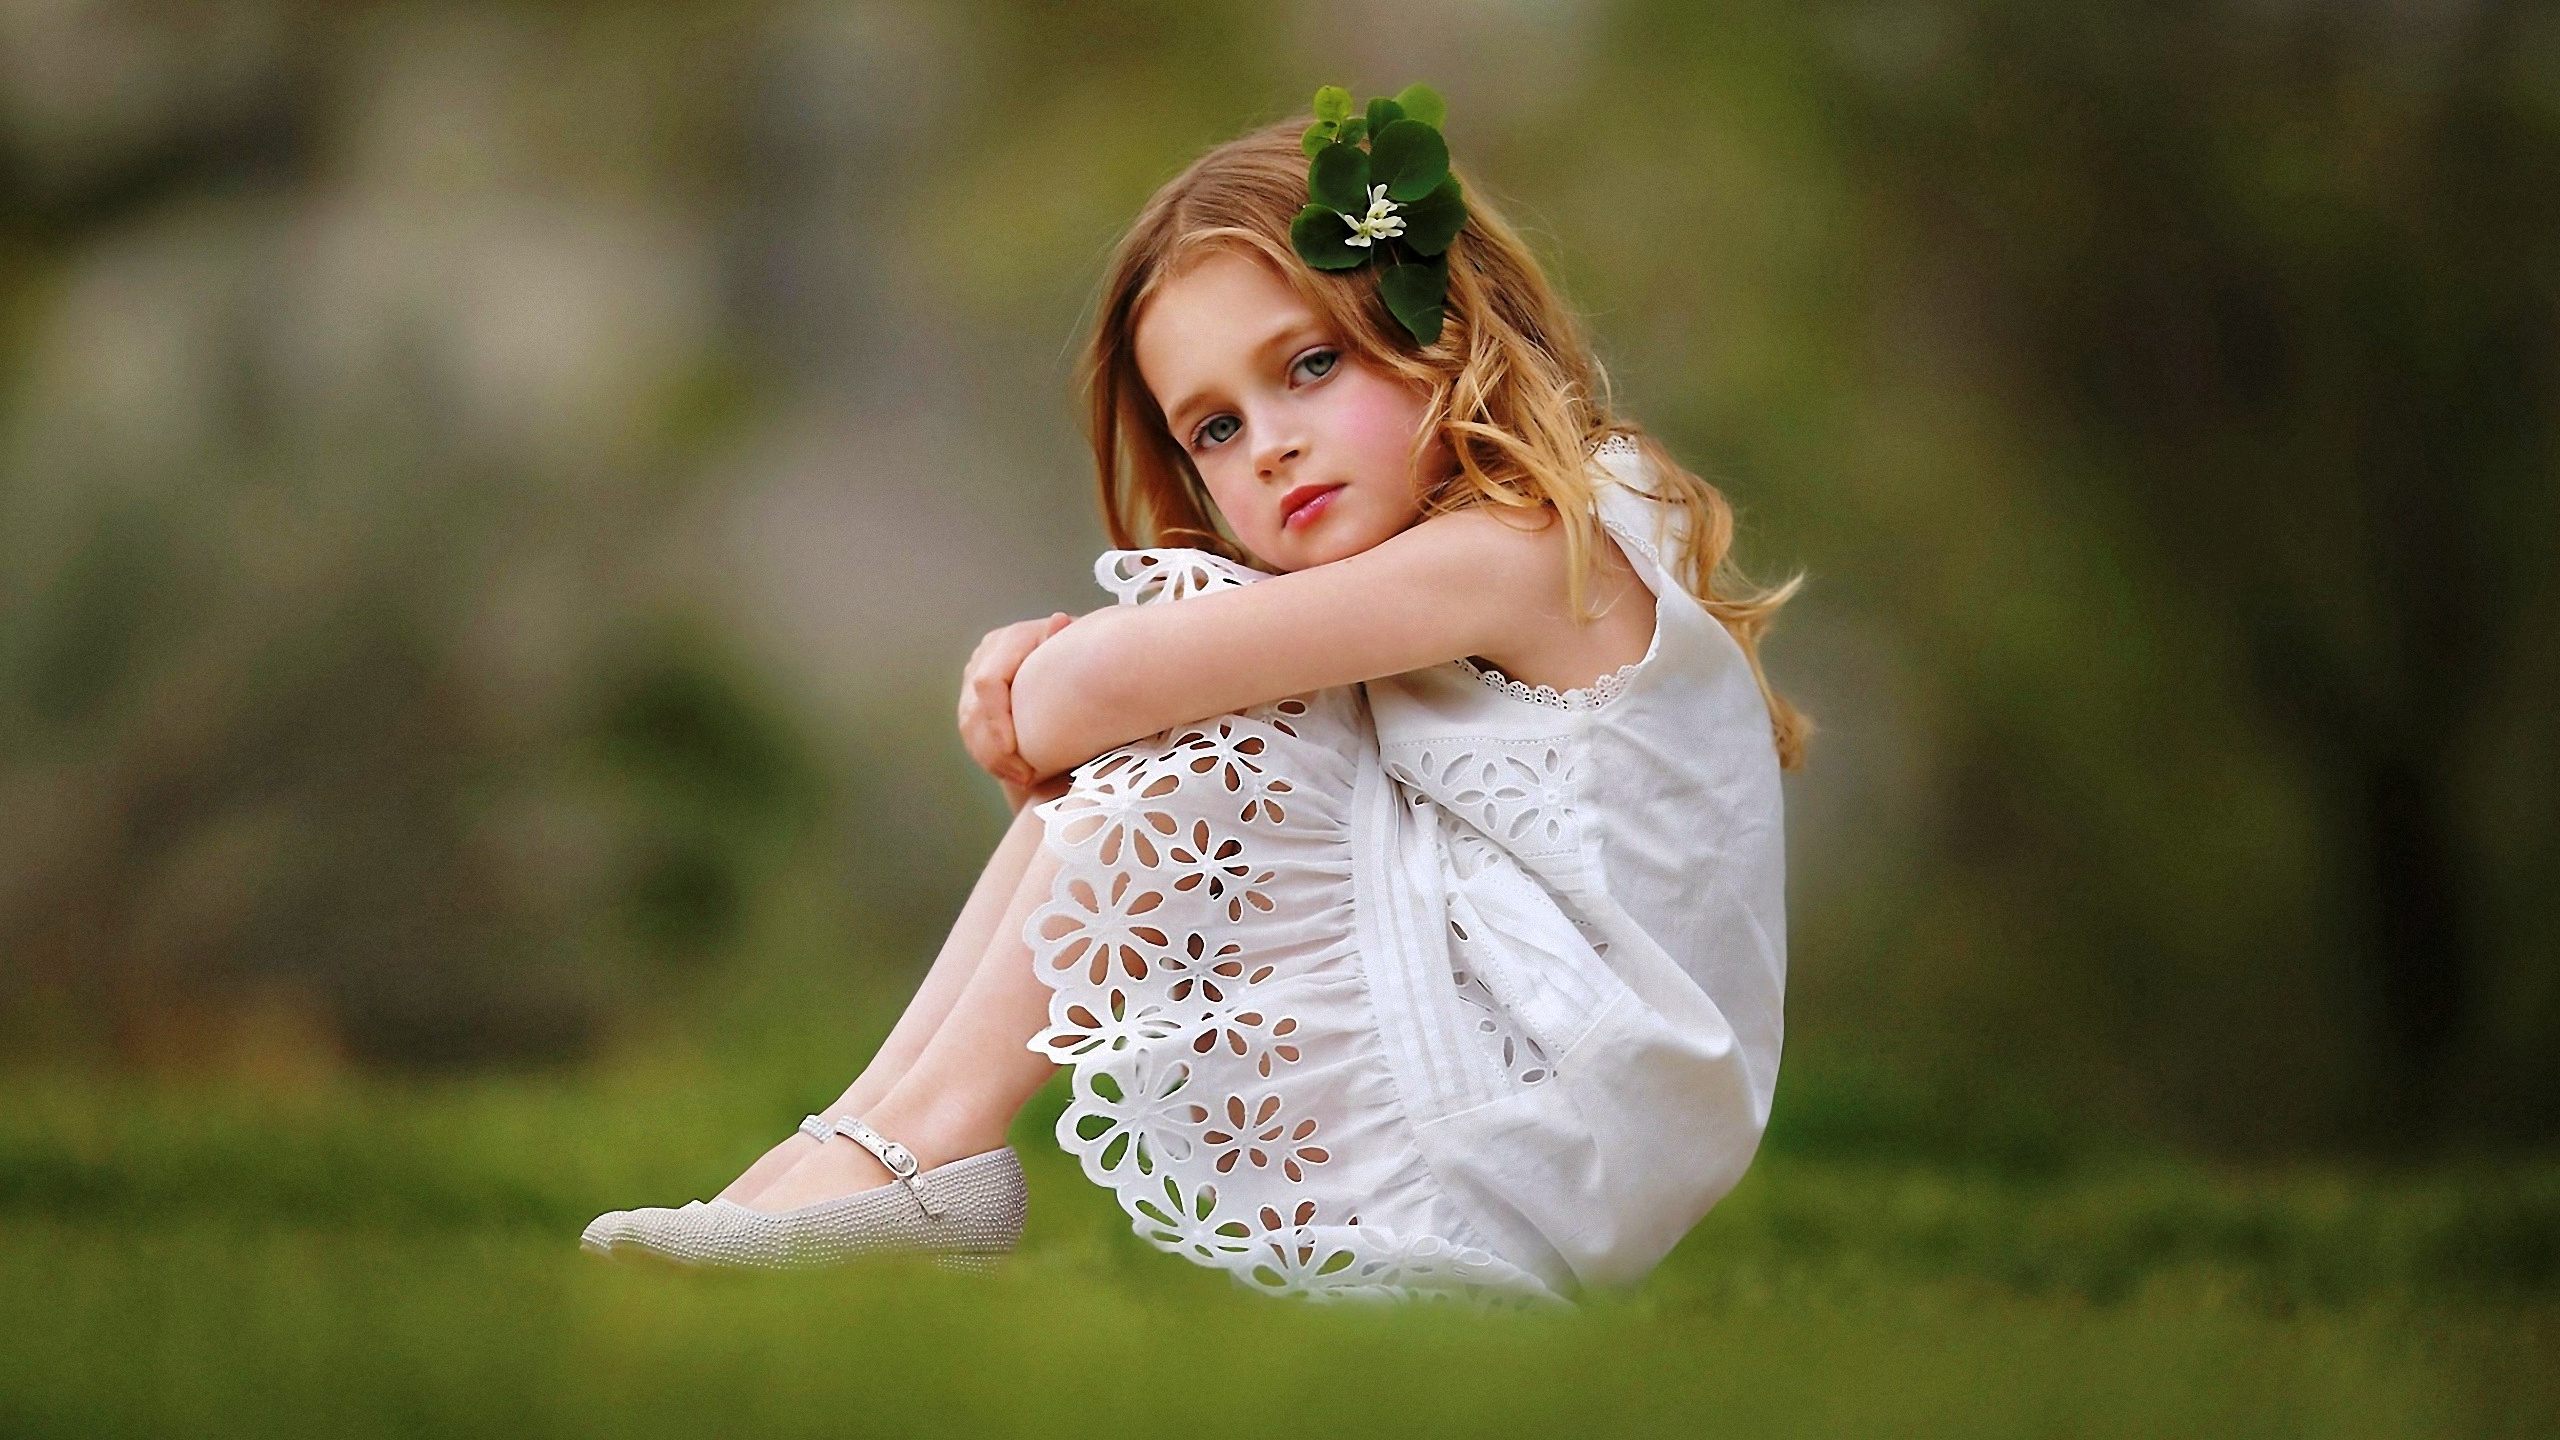 Child Photography Of Cute Little Girl Wallpaper HD For Desktop